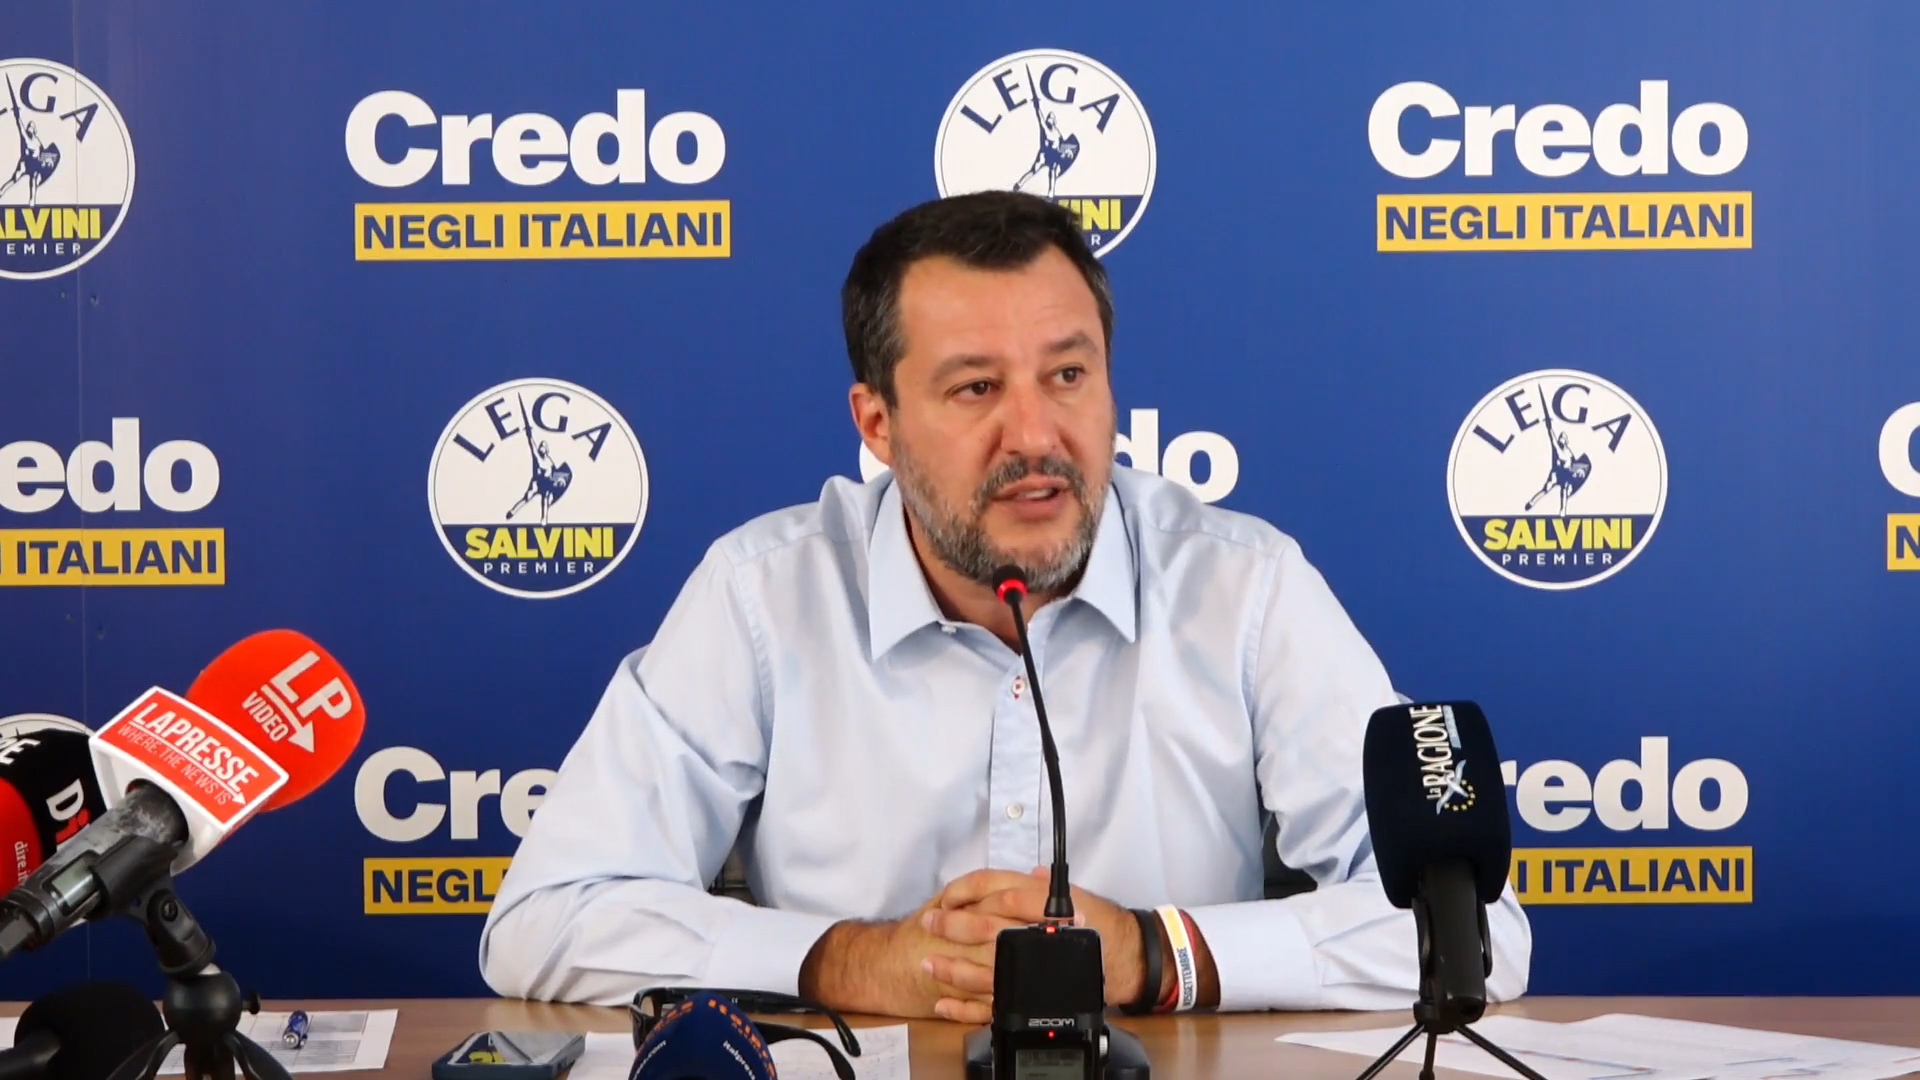 Verso il 2023, Salvini blinda le candidature di Rolfi e Fontana